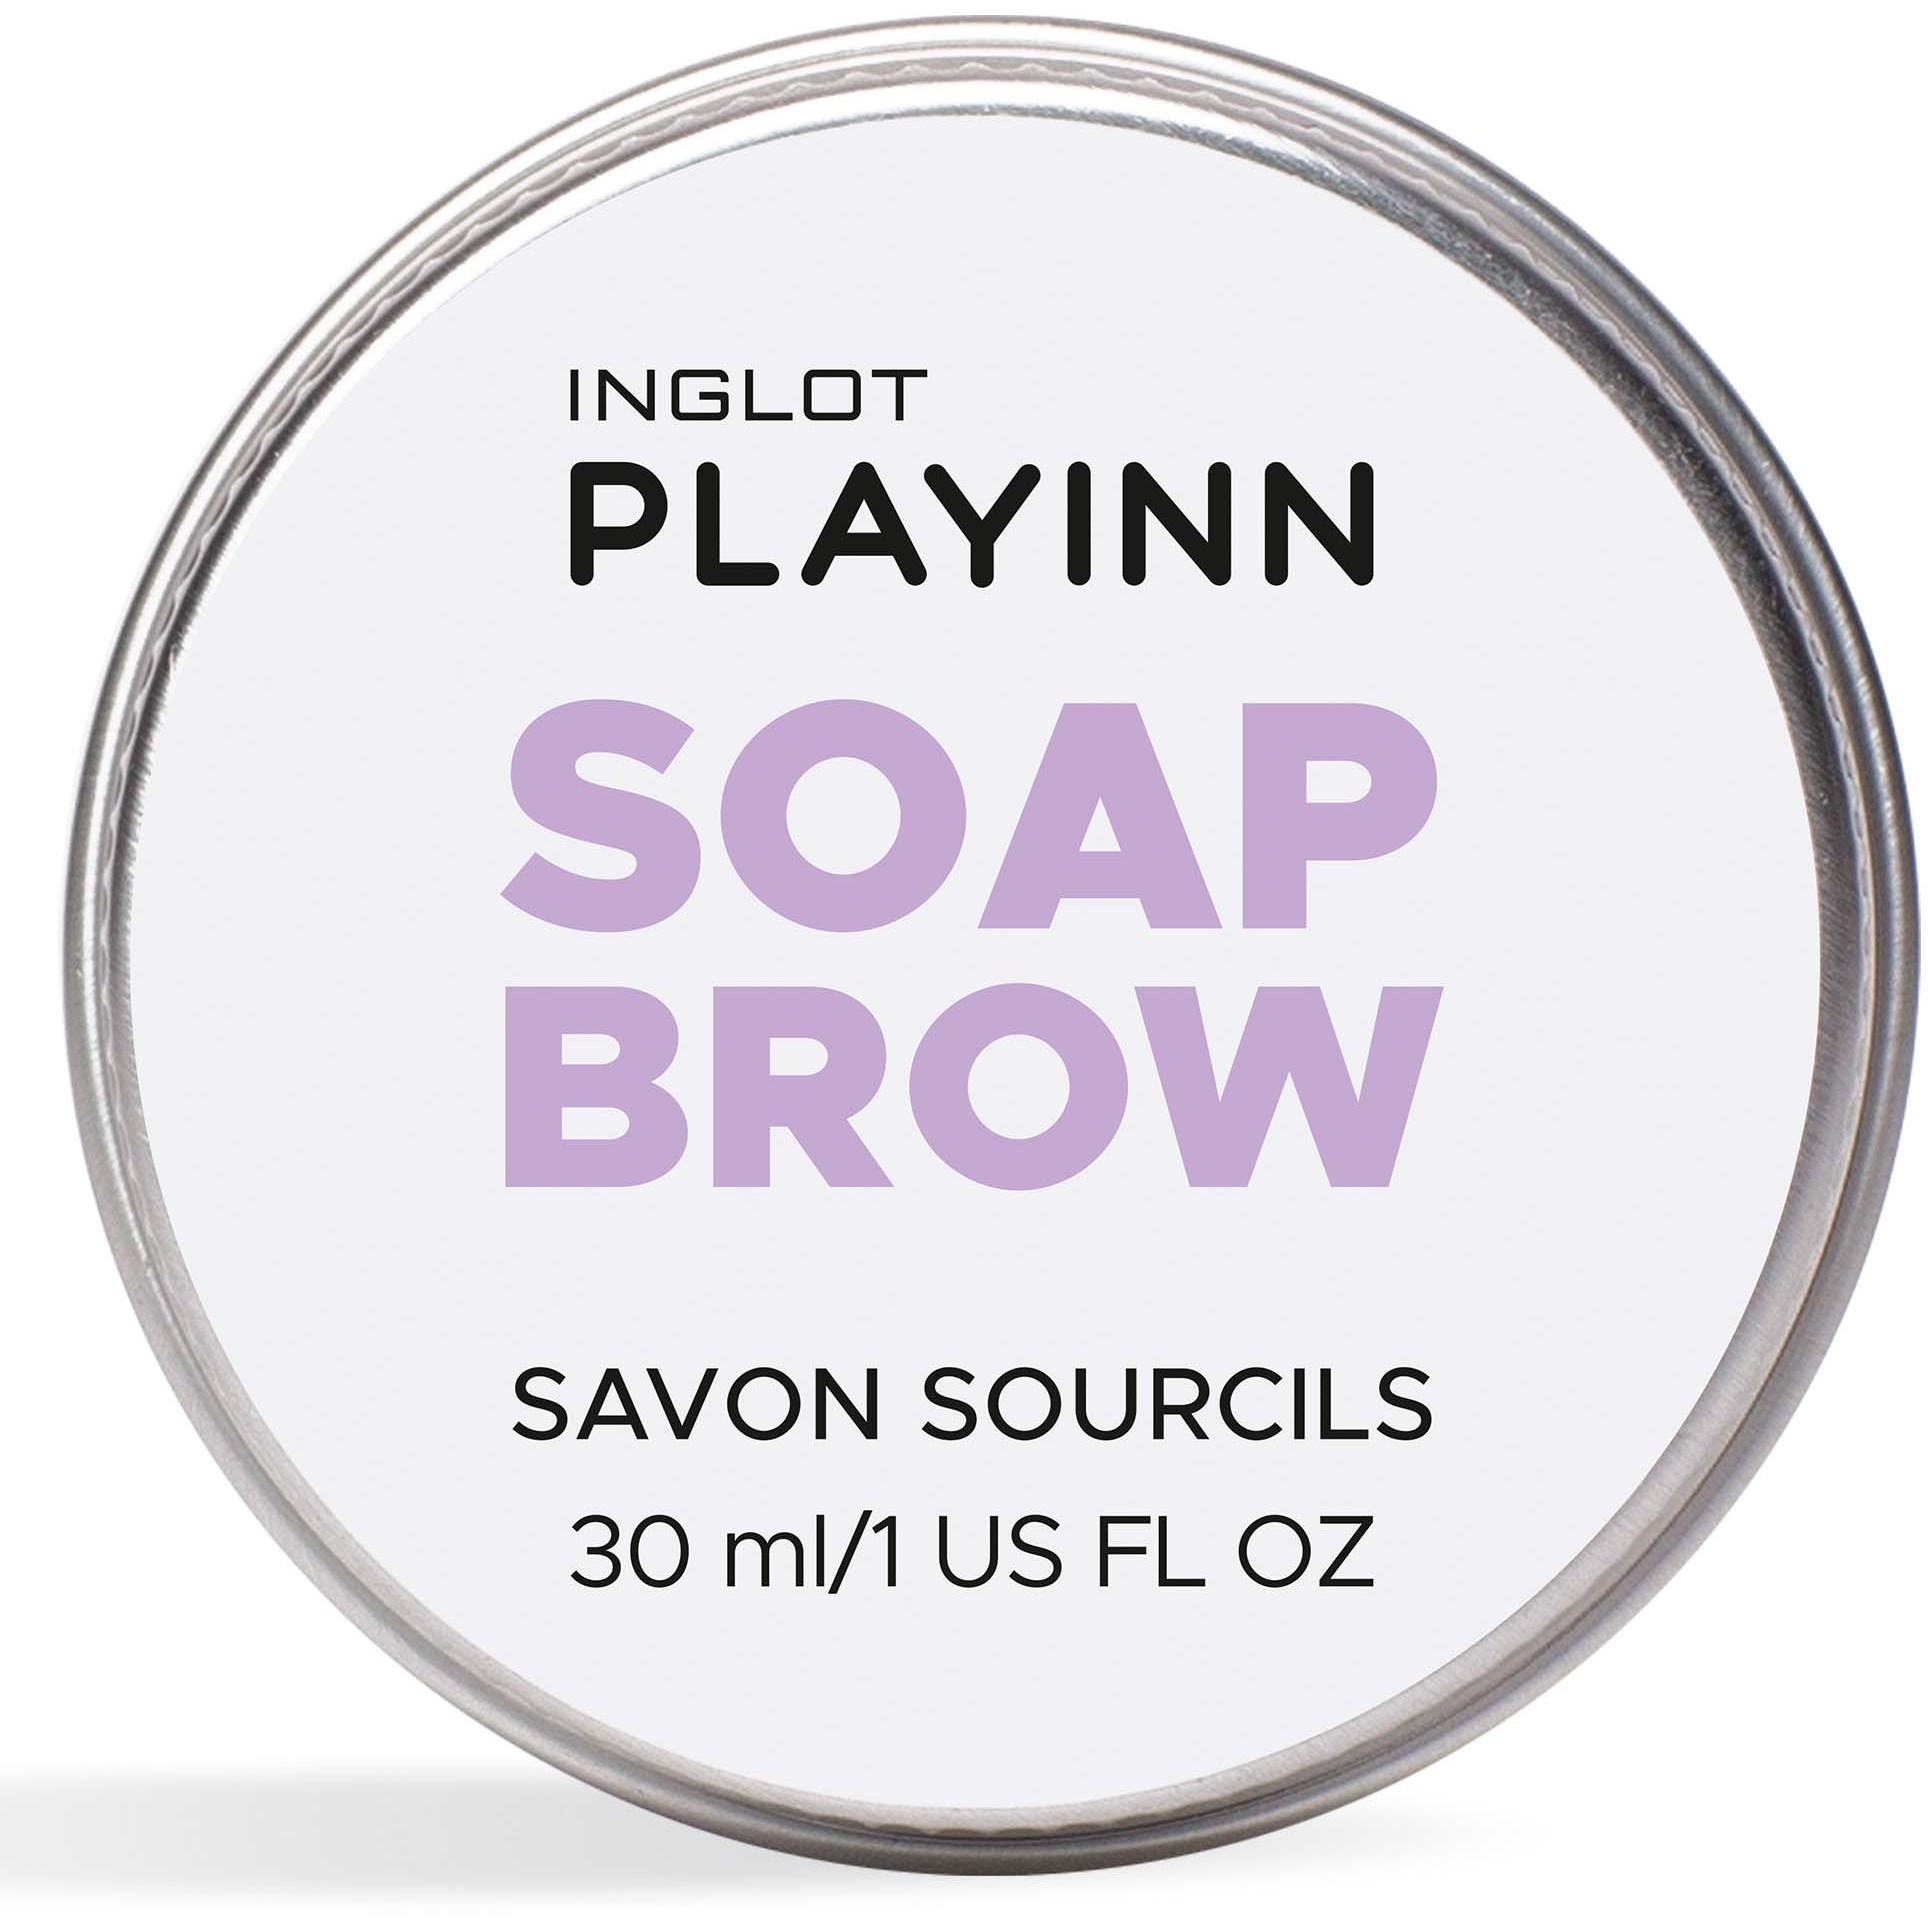 Läs mer om Inglot Playinn Soap Brow 30 ml